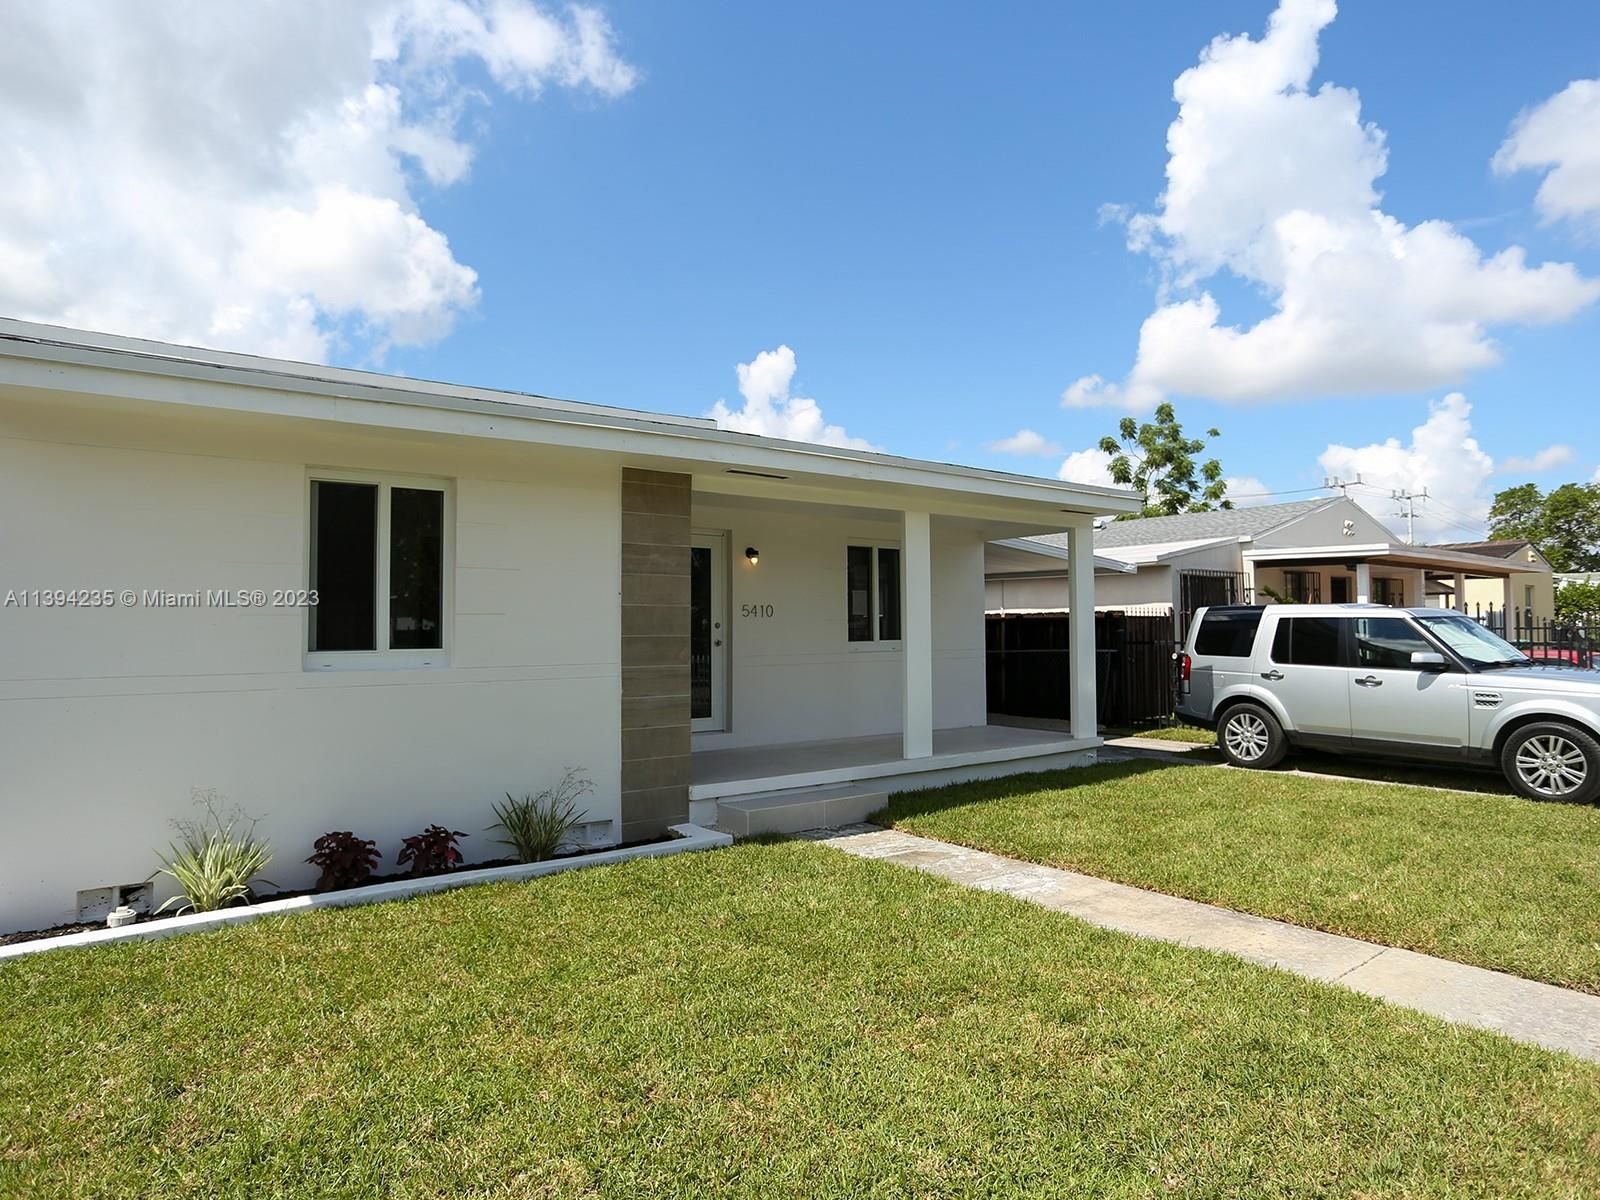 Real estate property located at 5410 4th St, Miami-Dade County, Miami, FL